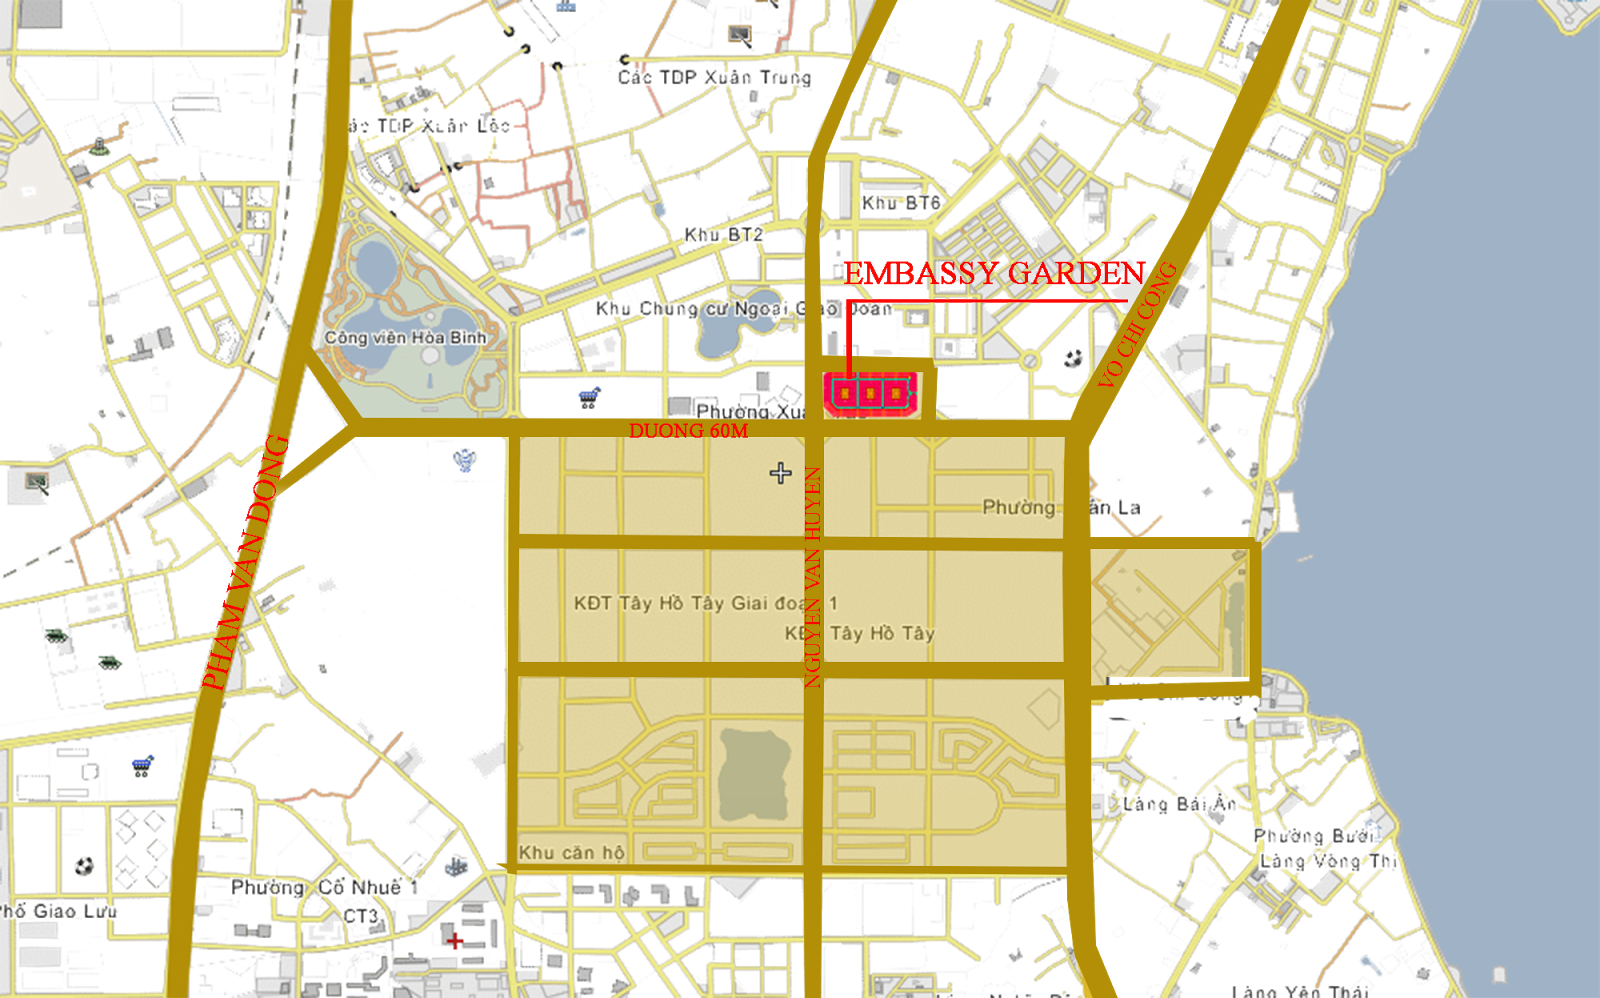 Location of Embassy Garden shophouse